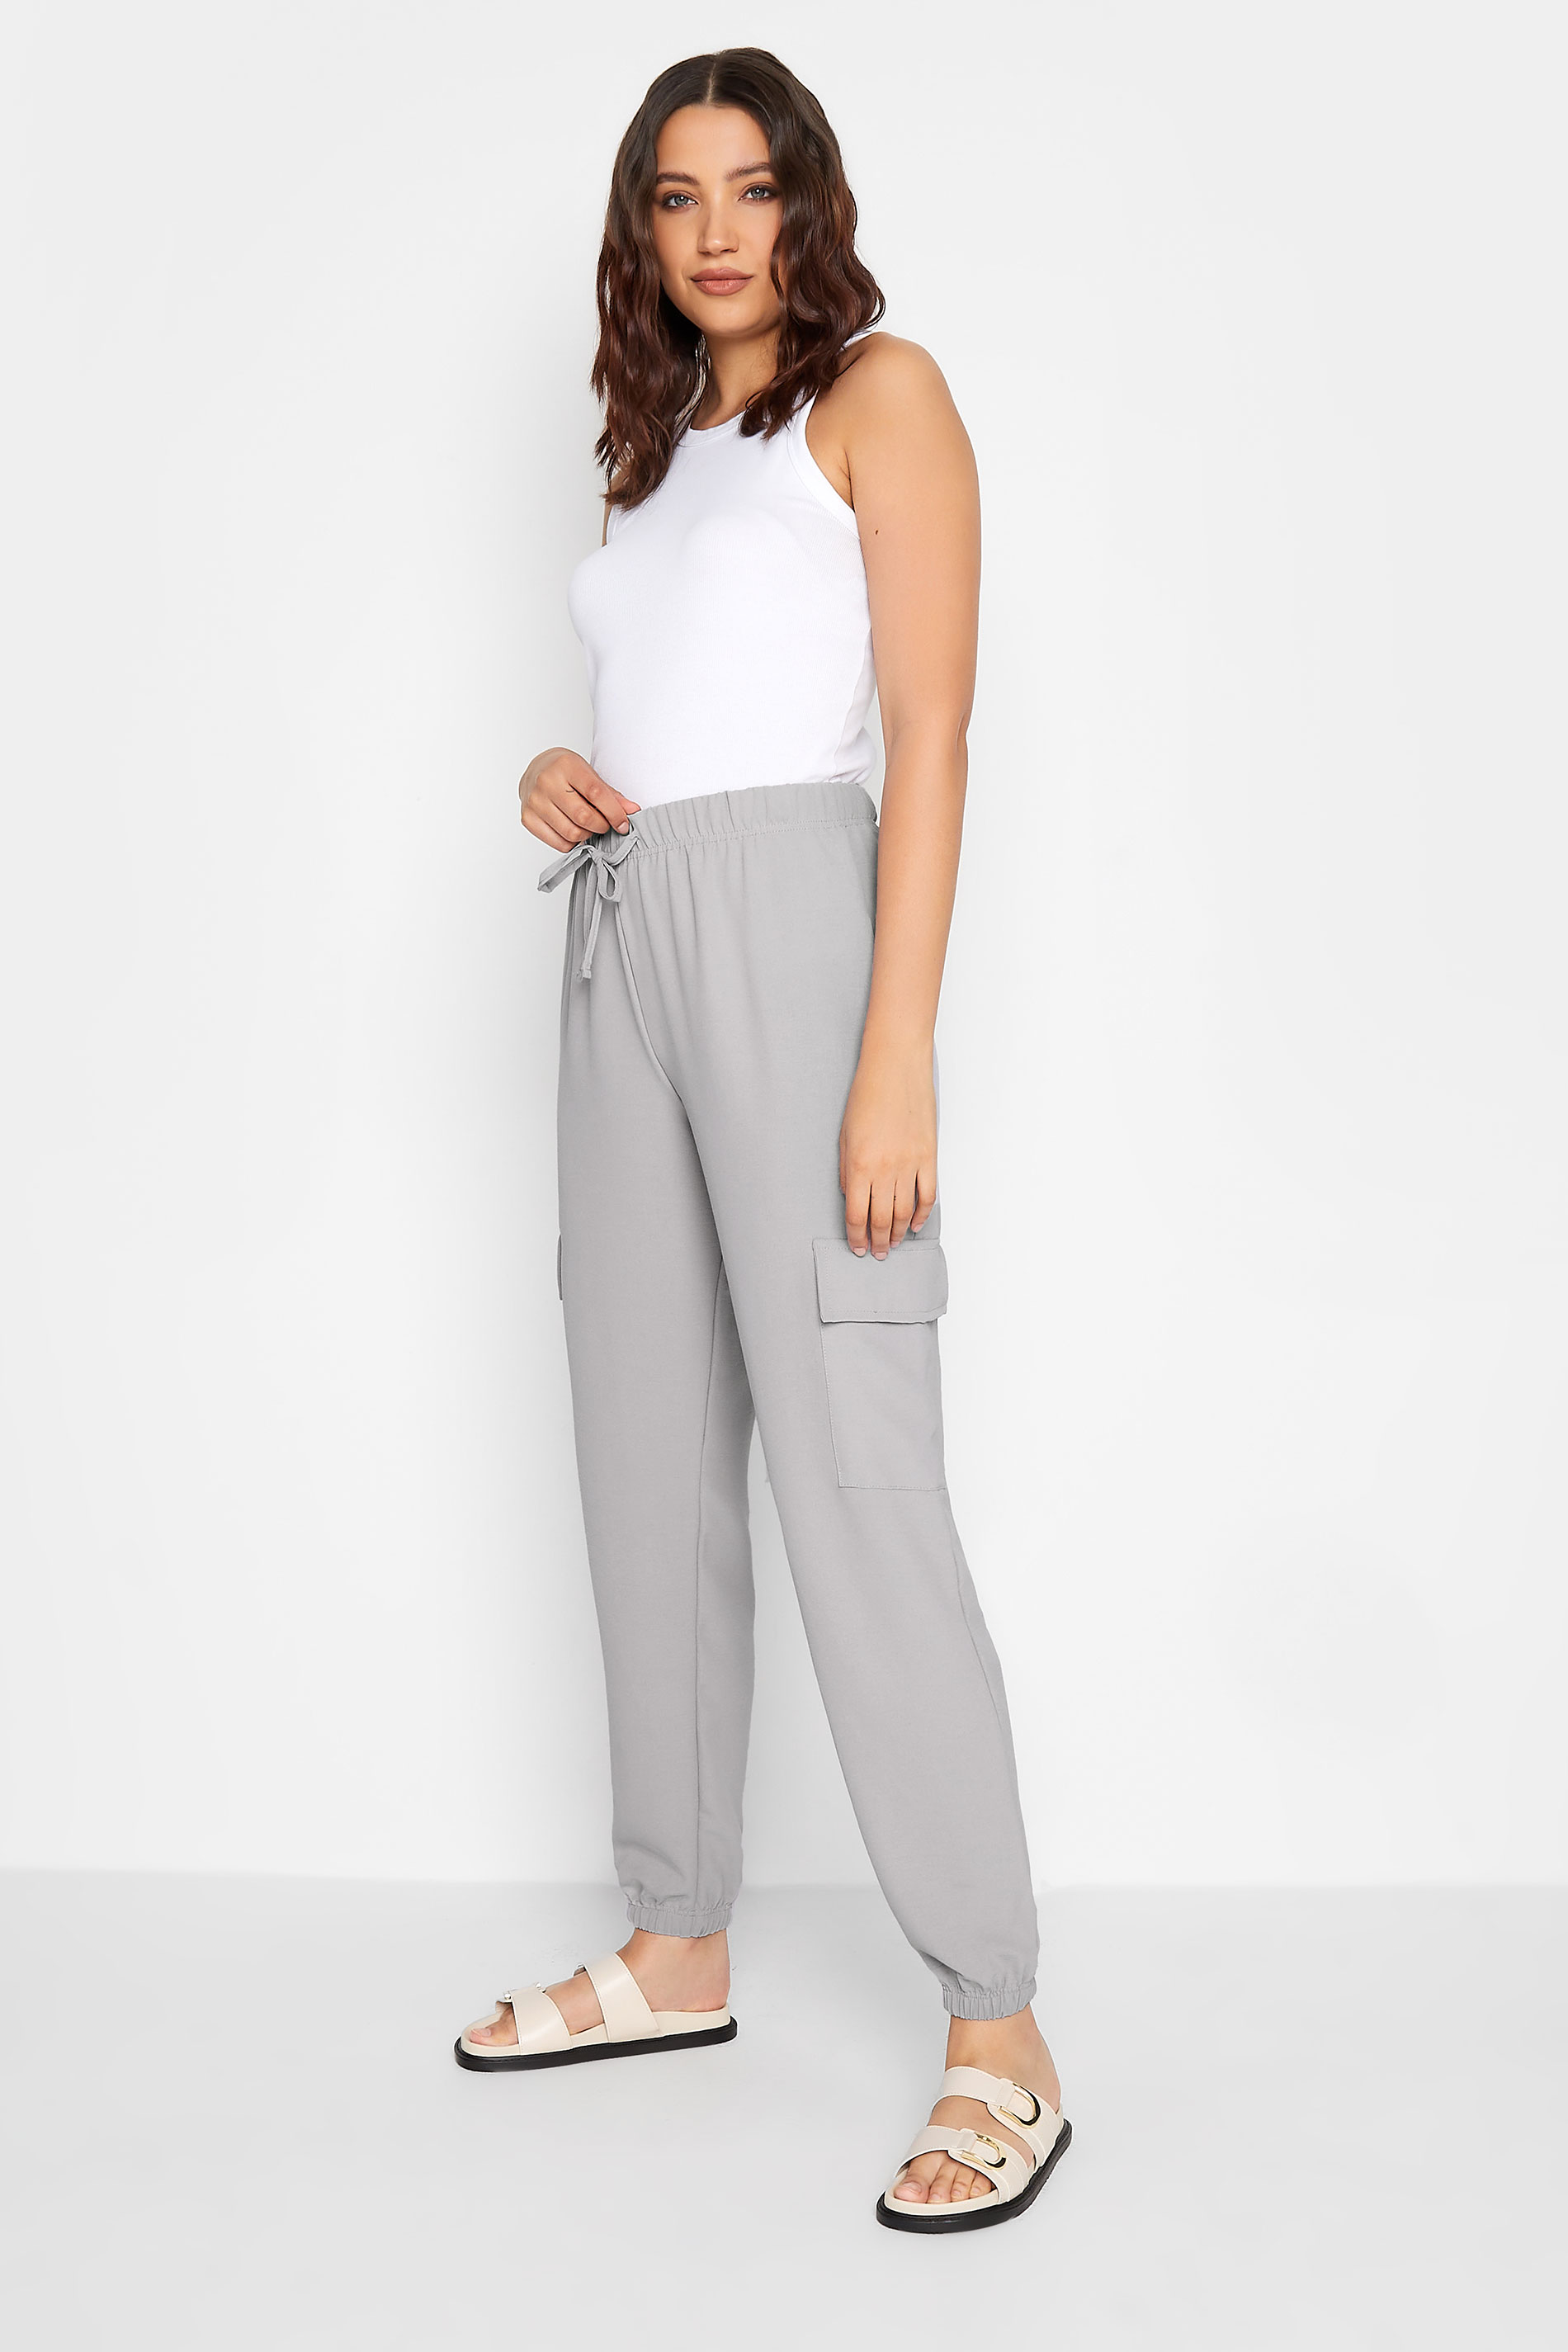 LTS Tall Women's Grey Cuffed Utility Trousers | Long Tall Sally 3